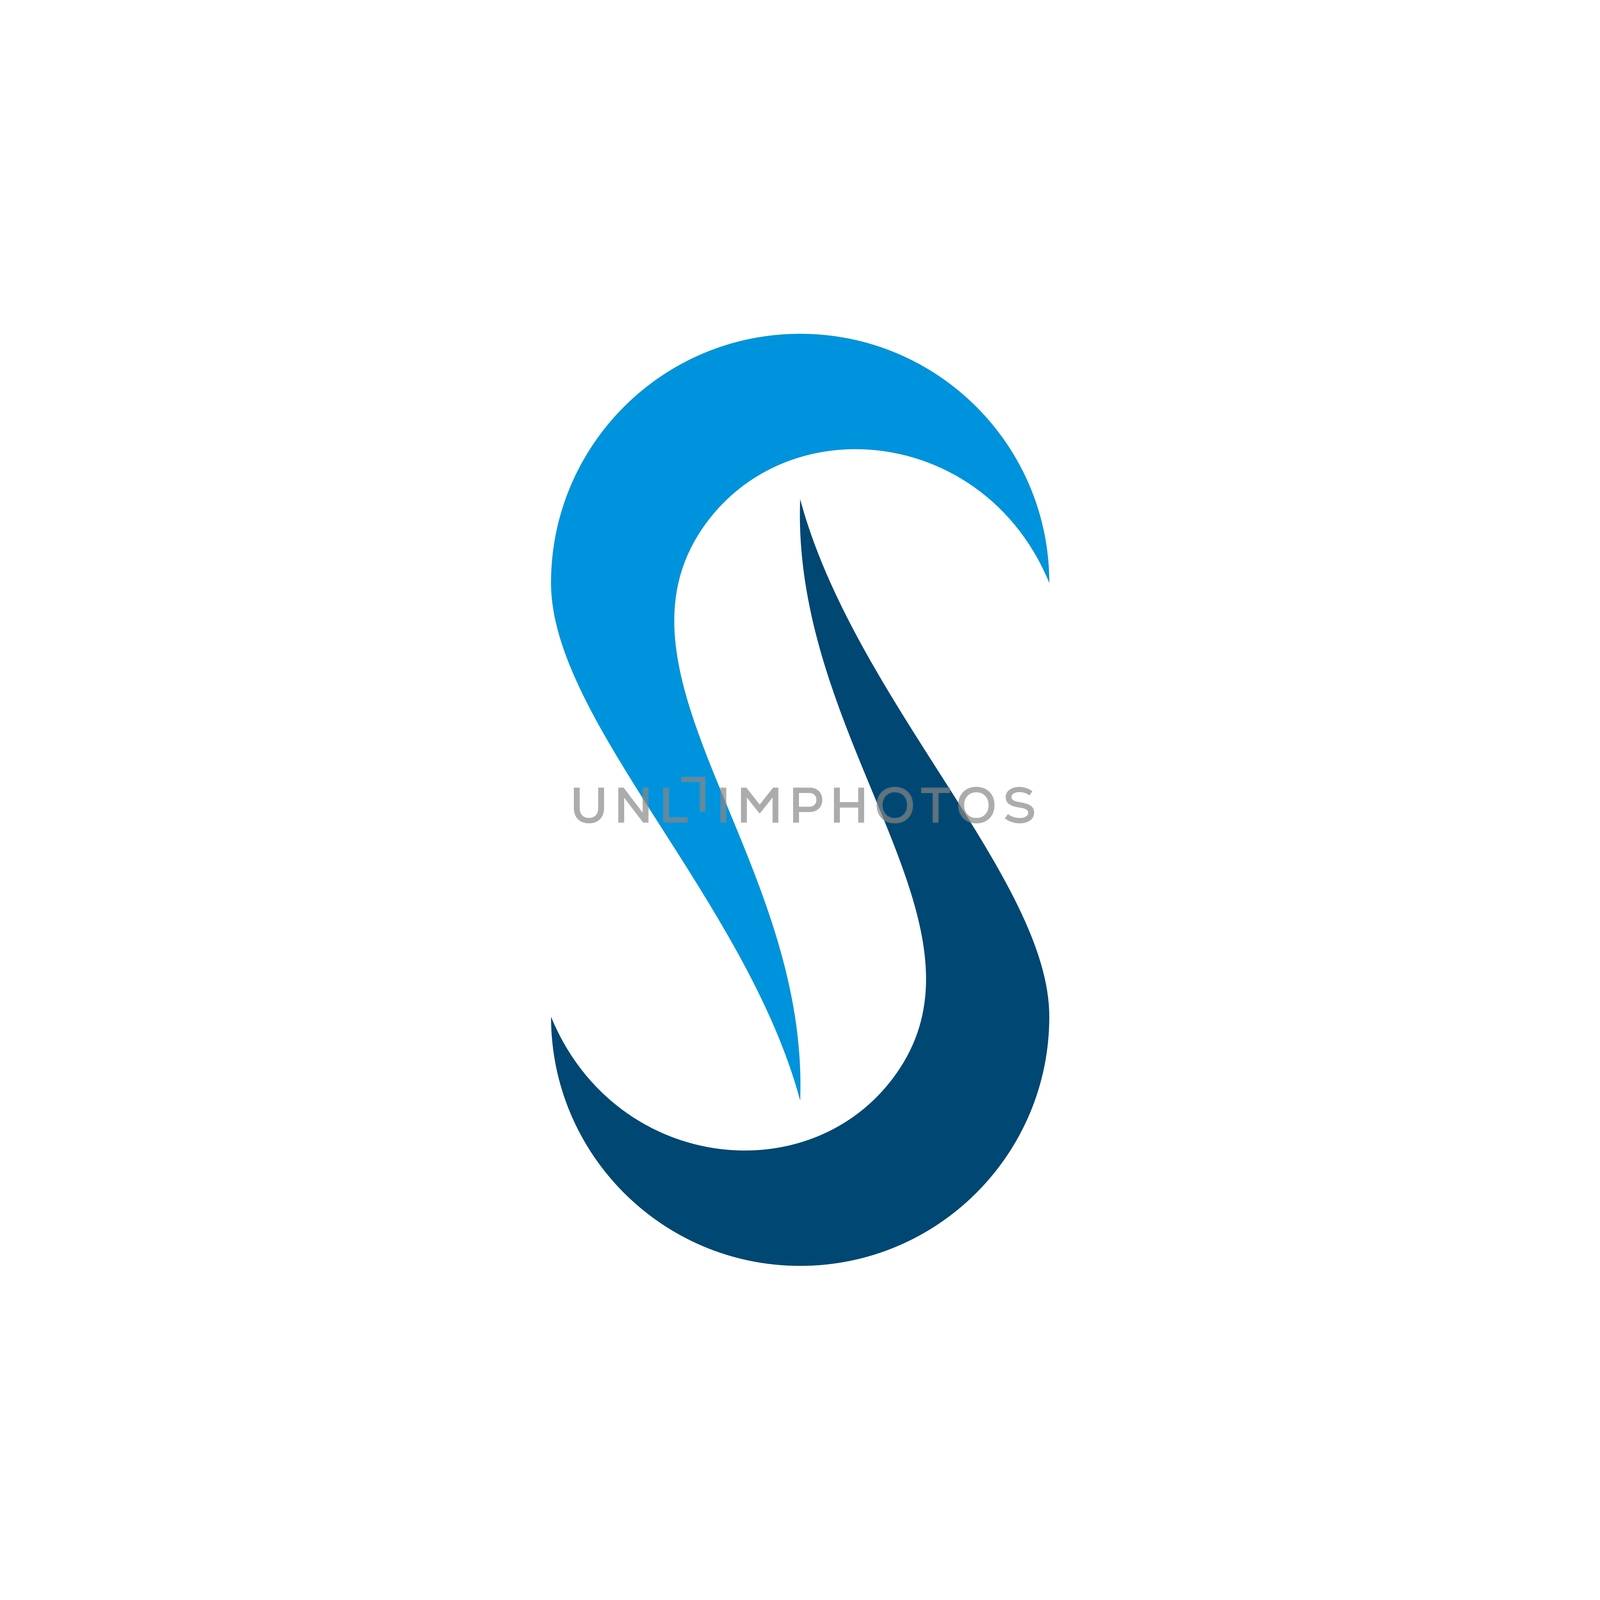 S Letter Swoosh Logo Template Illustration Design. Vector EPS 10. by soponyono1